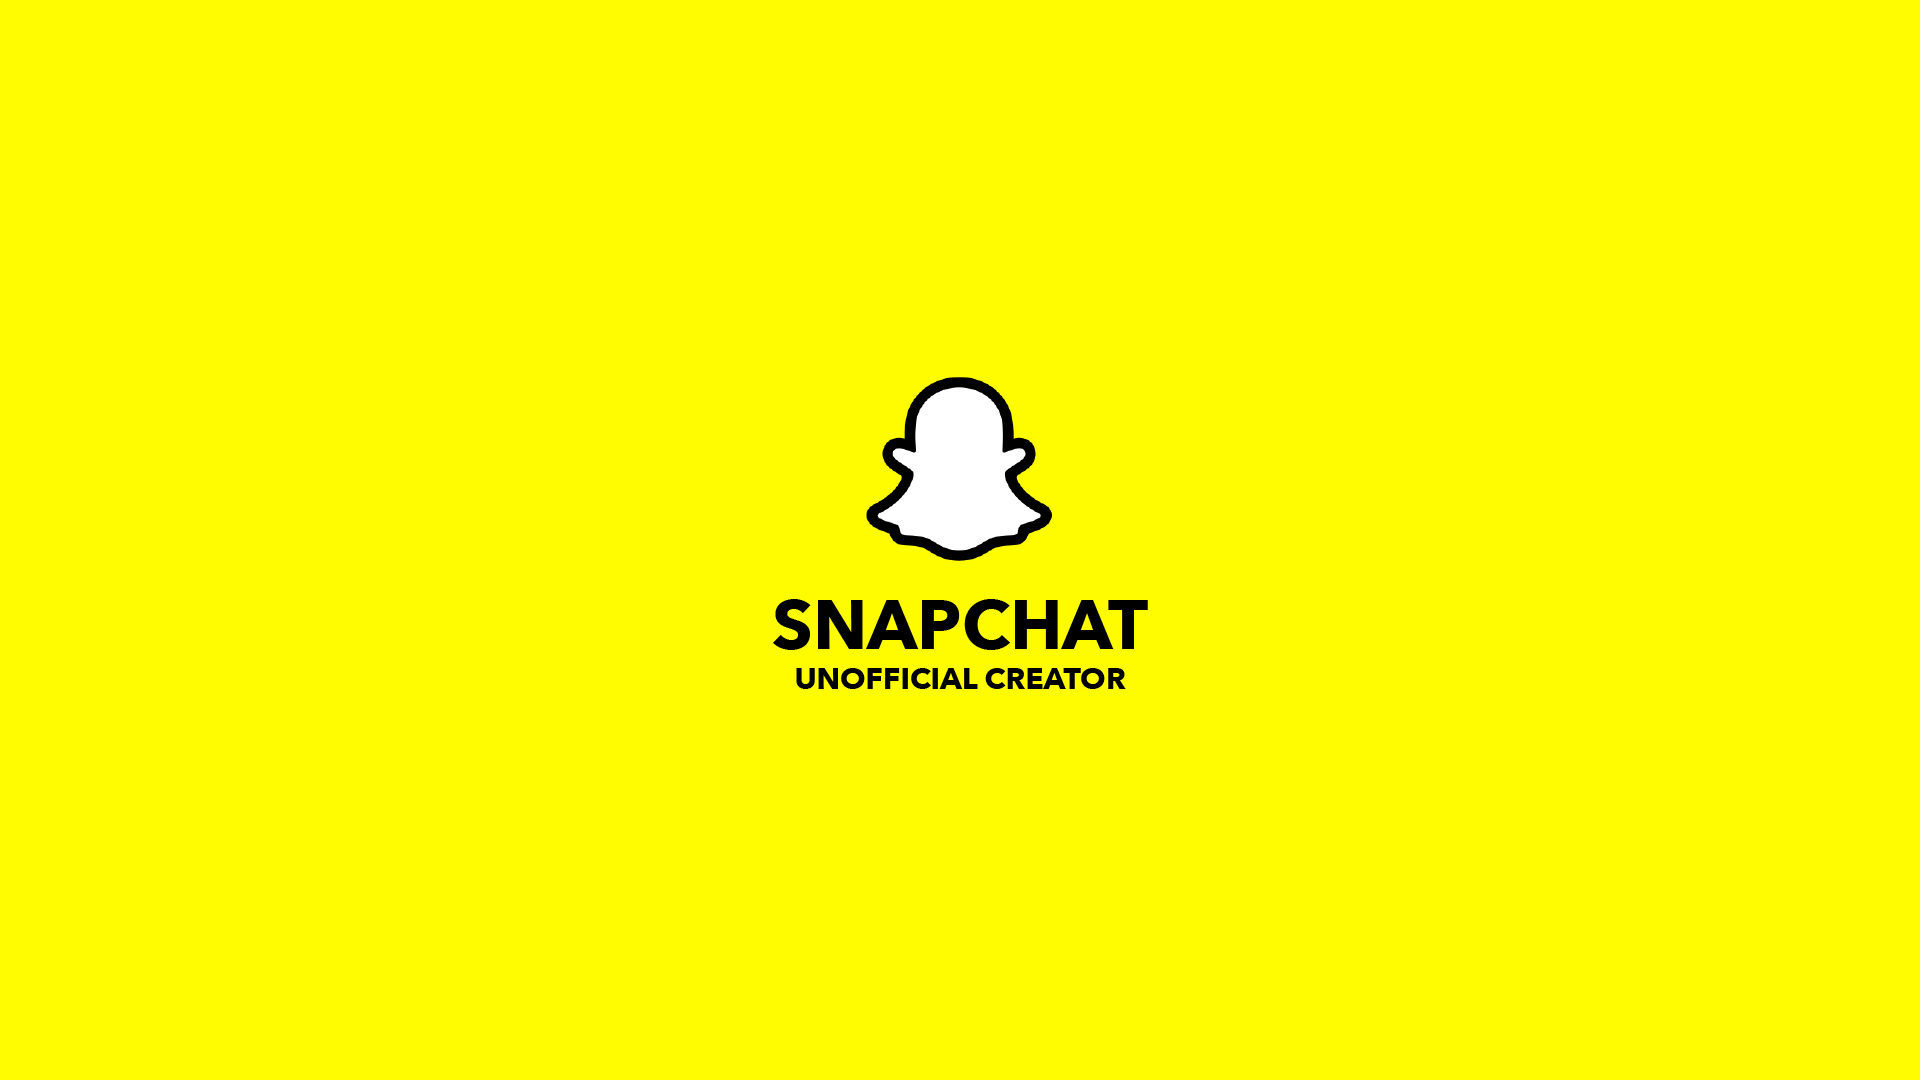 Snapchat Unofficial Creator Logo